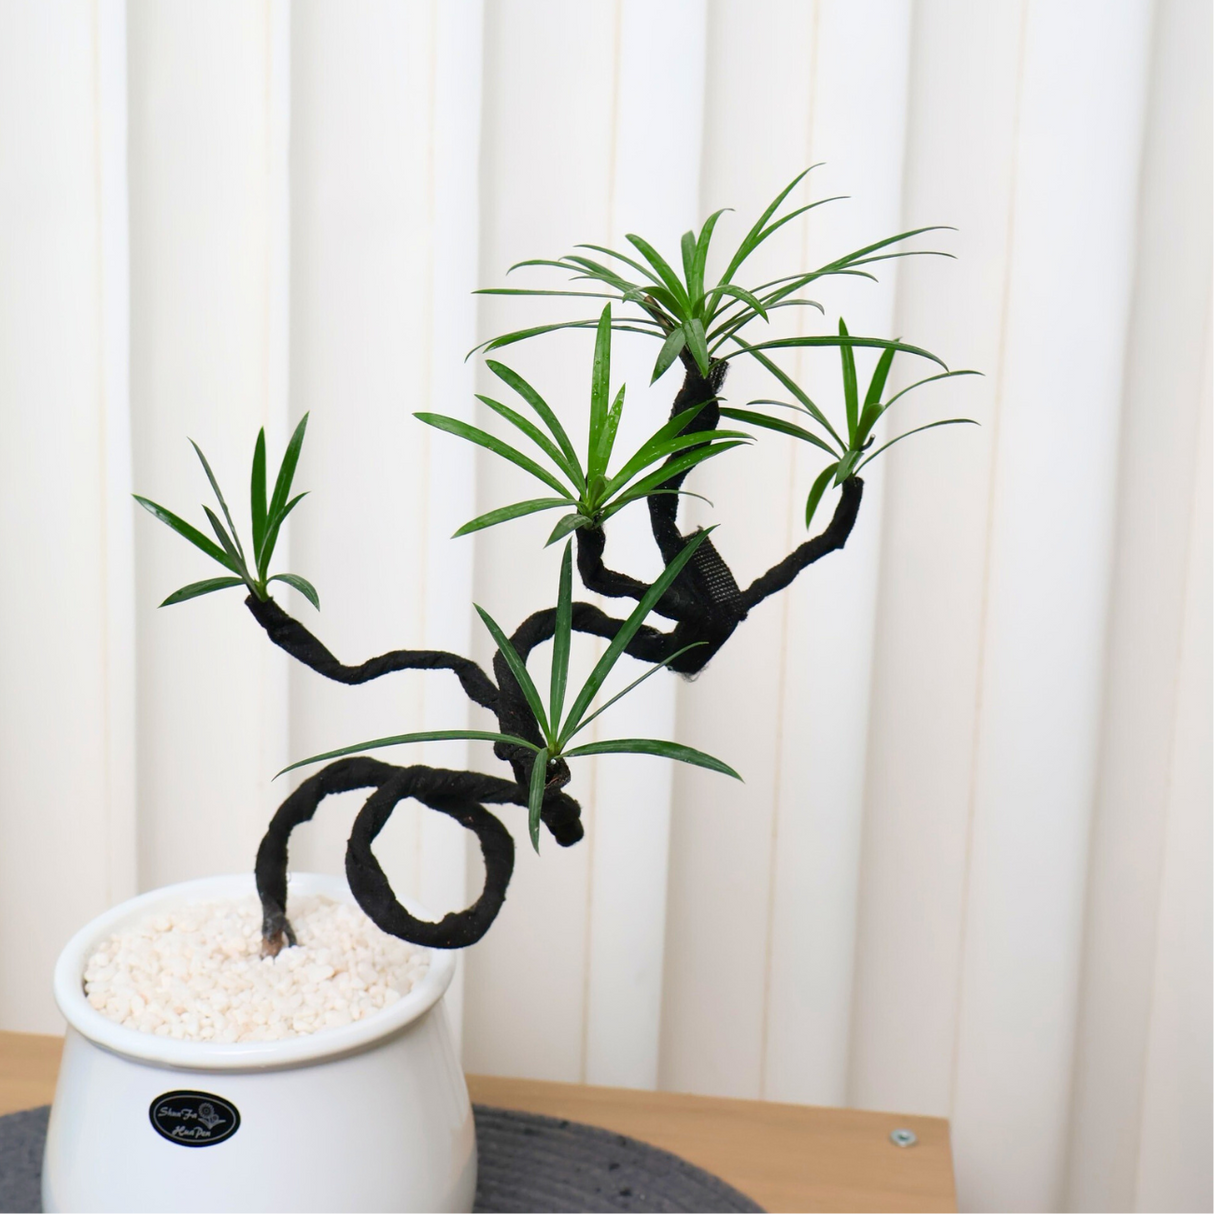 Podocarpus in Ceramic Pot